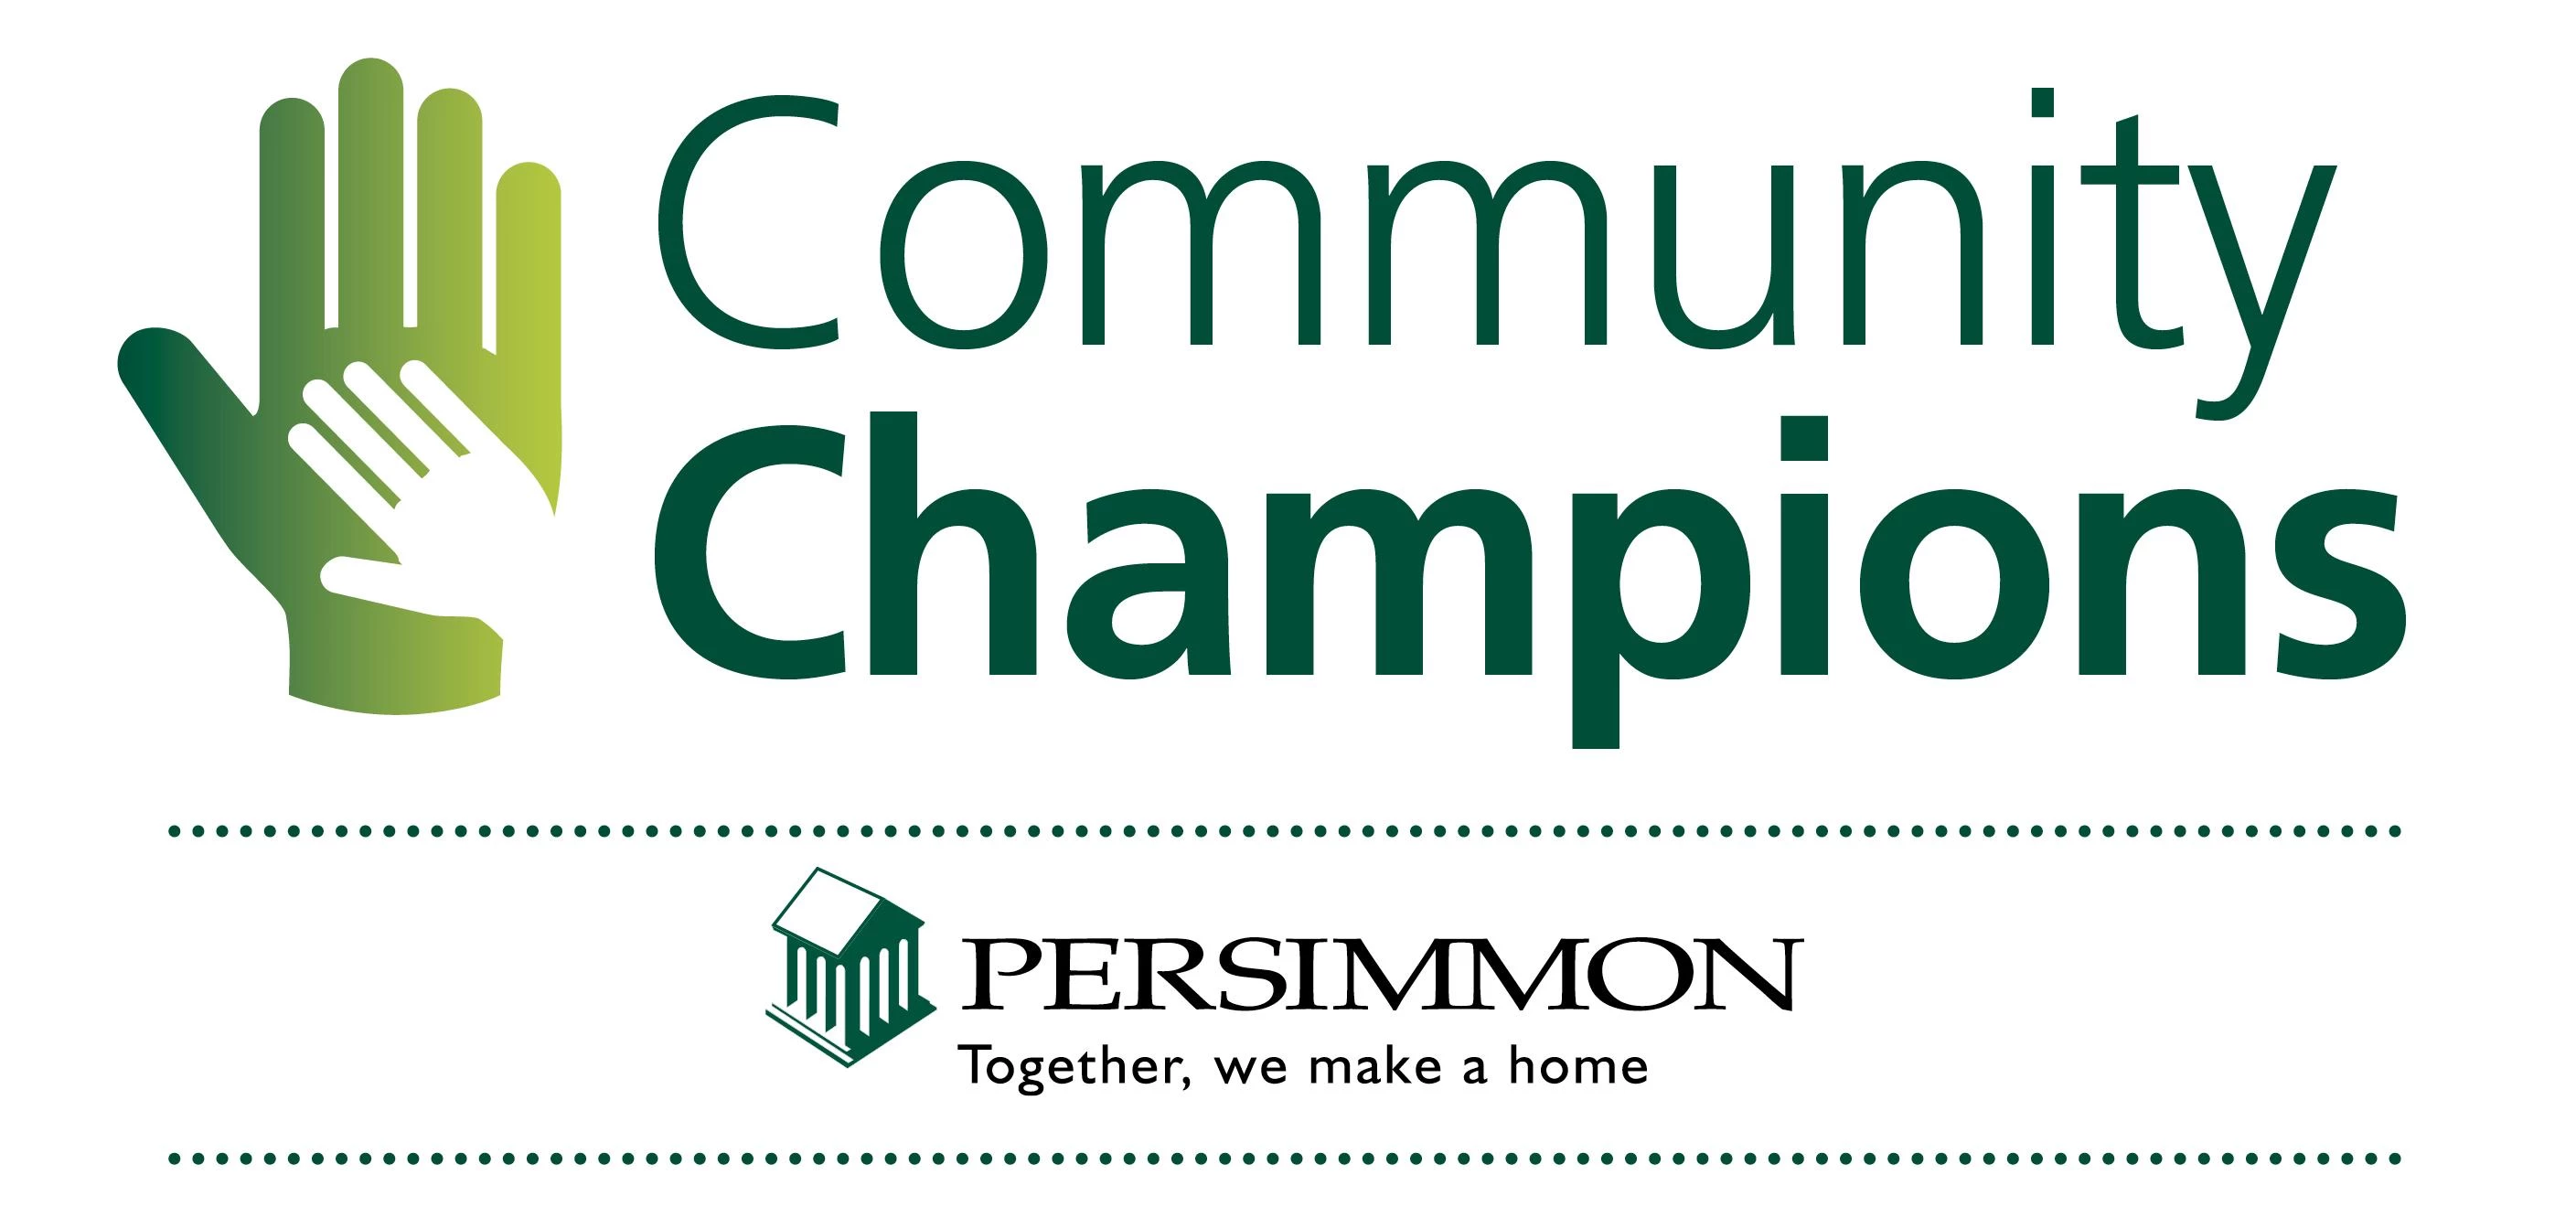 Persimmon's Community Champions scheme